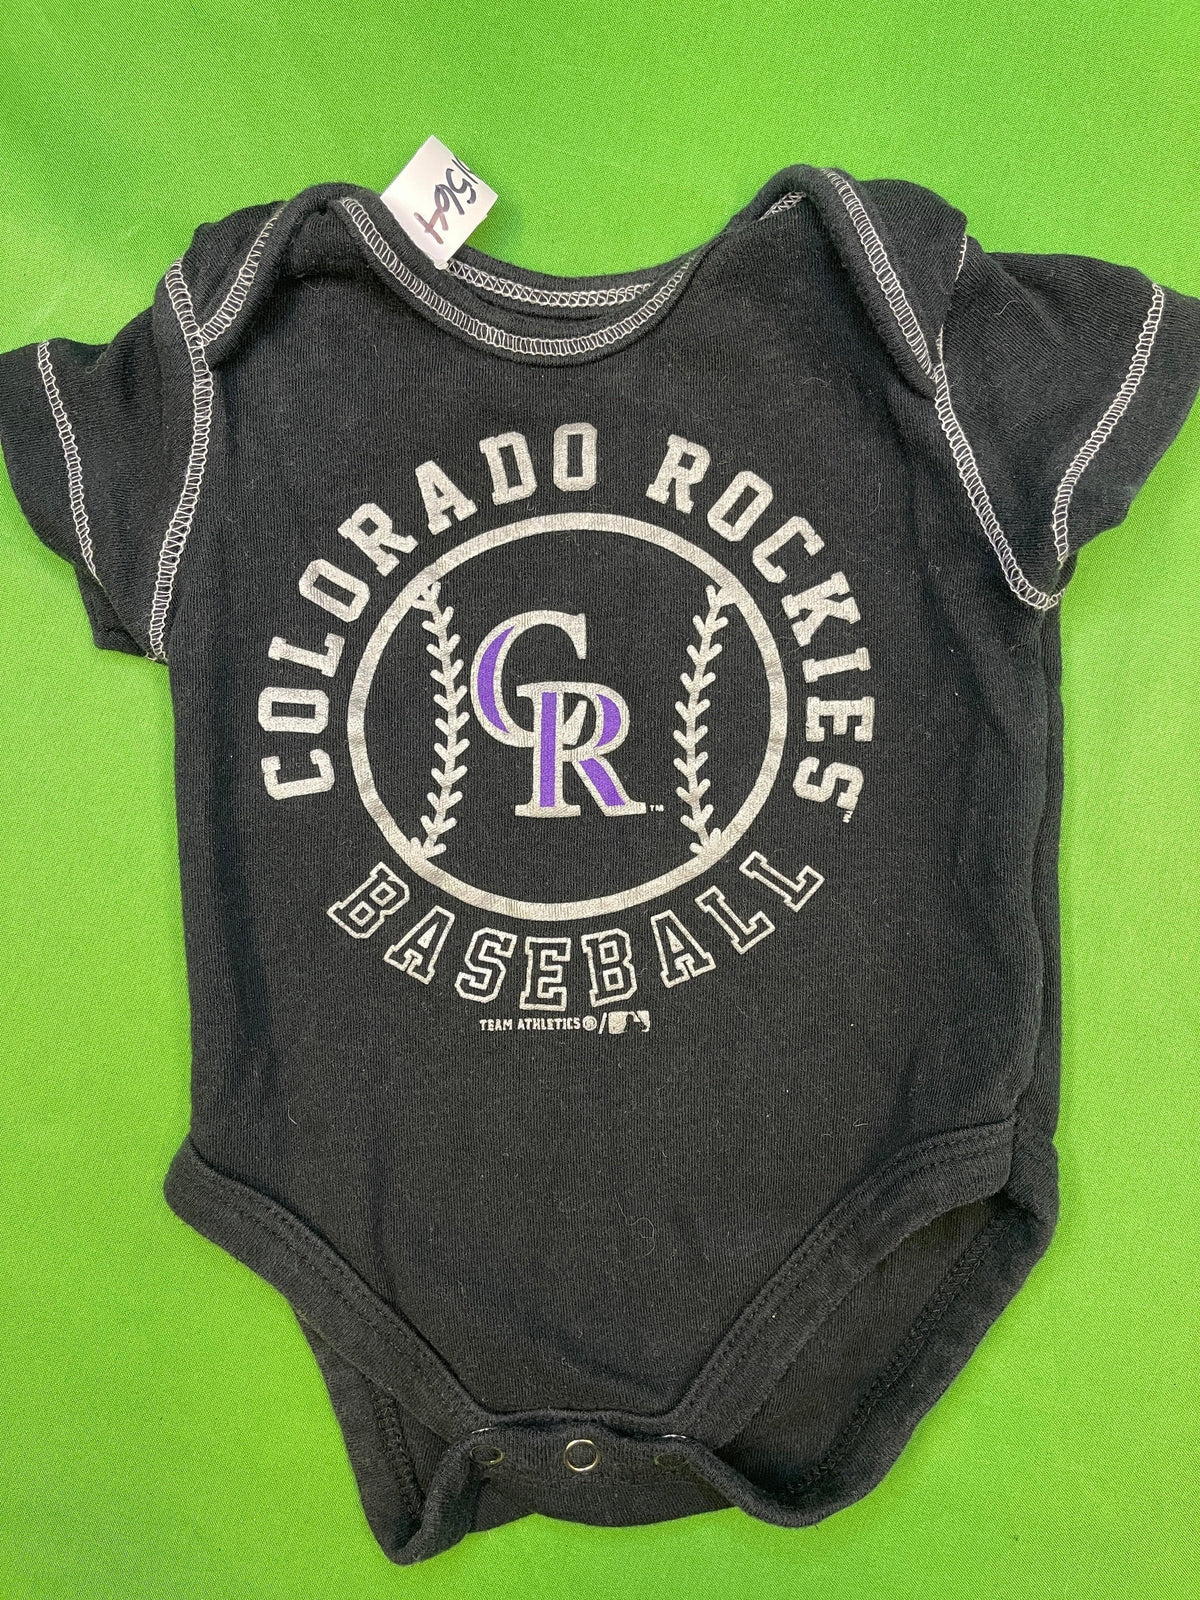 MLB Colorado Rockies Team Athletics Infant Bodysuit/Vest Newborn 0-3 months